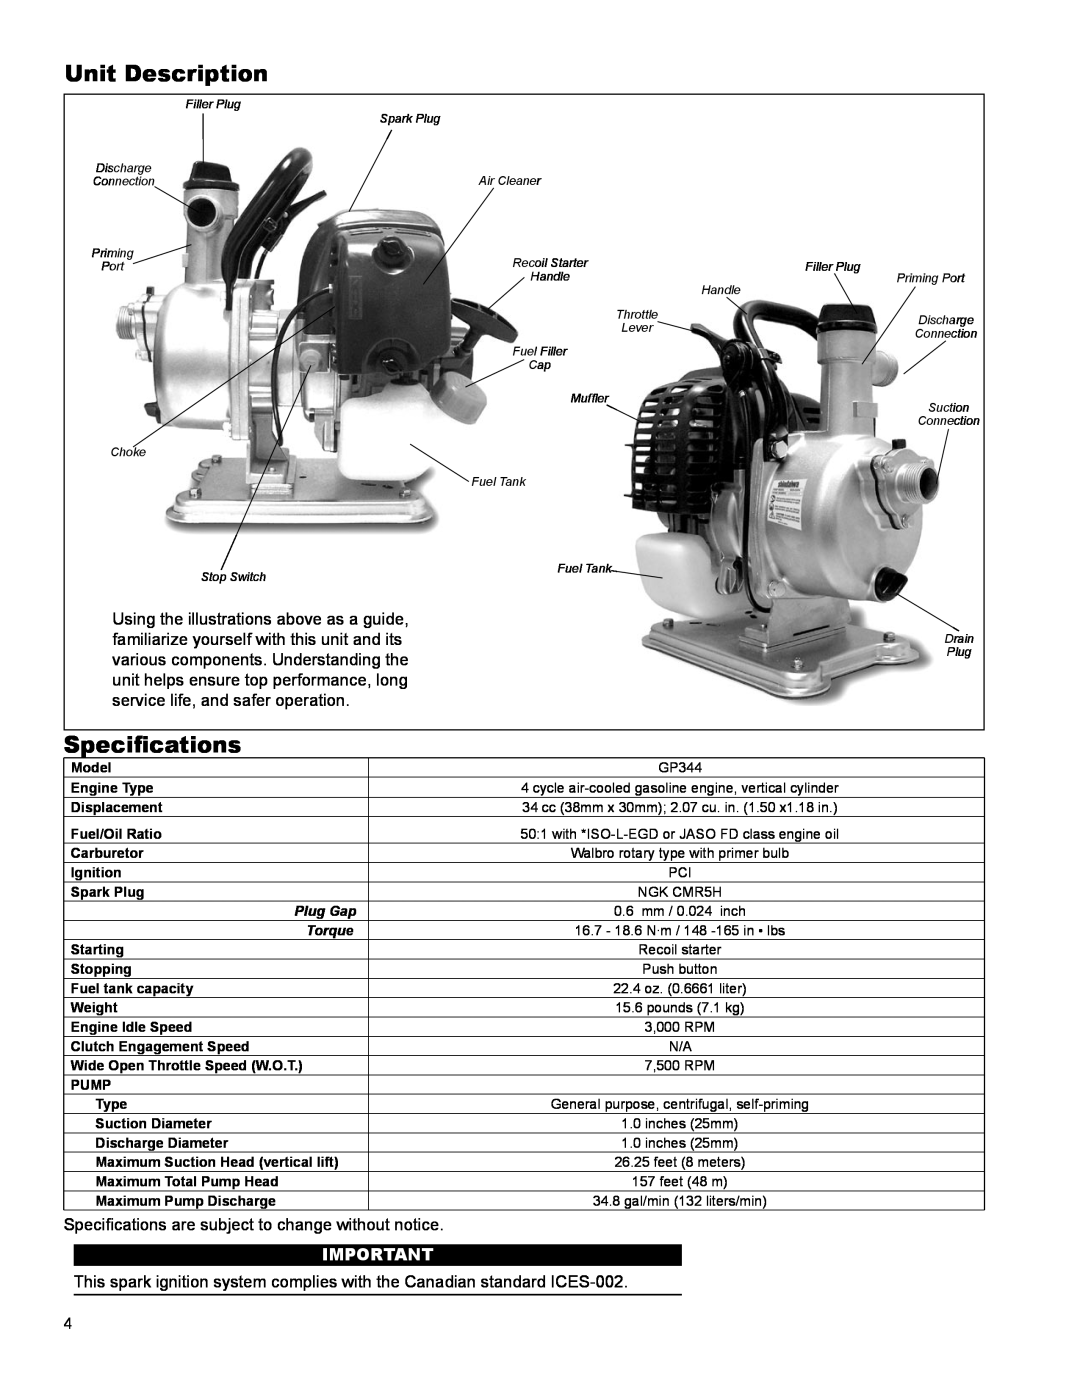 Shindaiwa X7506720300, GP344 Unit Description, Specifications, Using the illustrations above as a guide, Plug Gap, Torque 